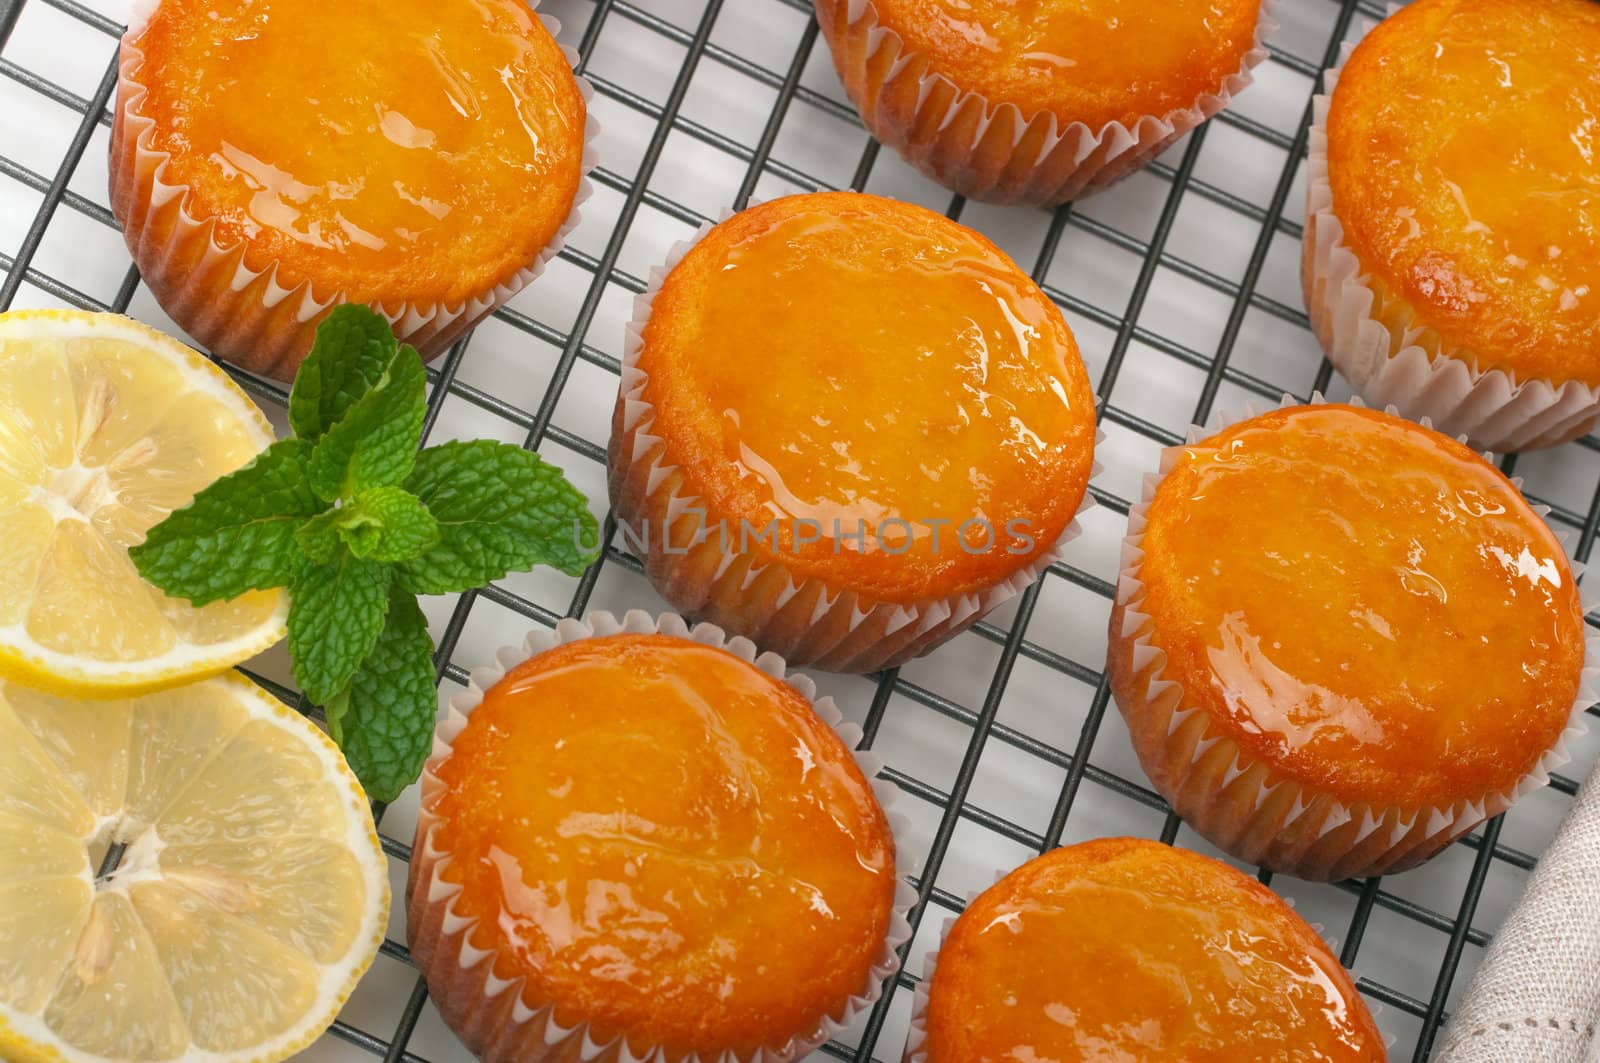 Citrus cupcakes with lemon glaze on cooling rack